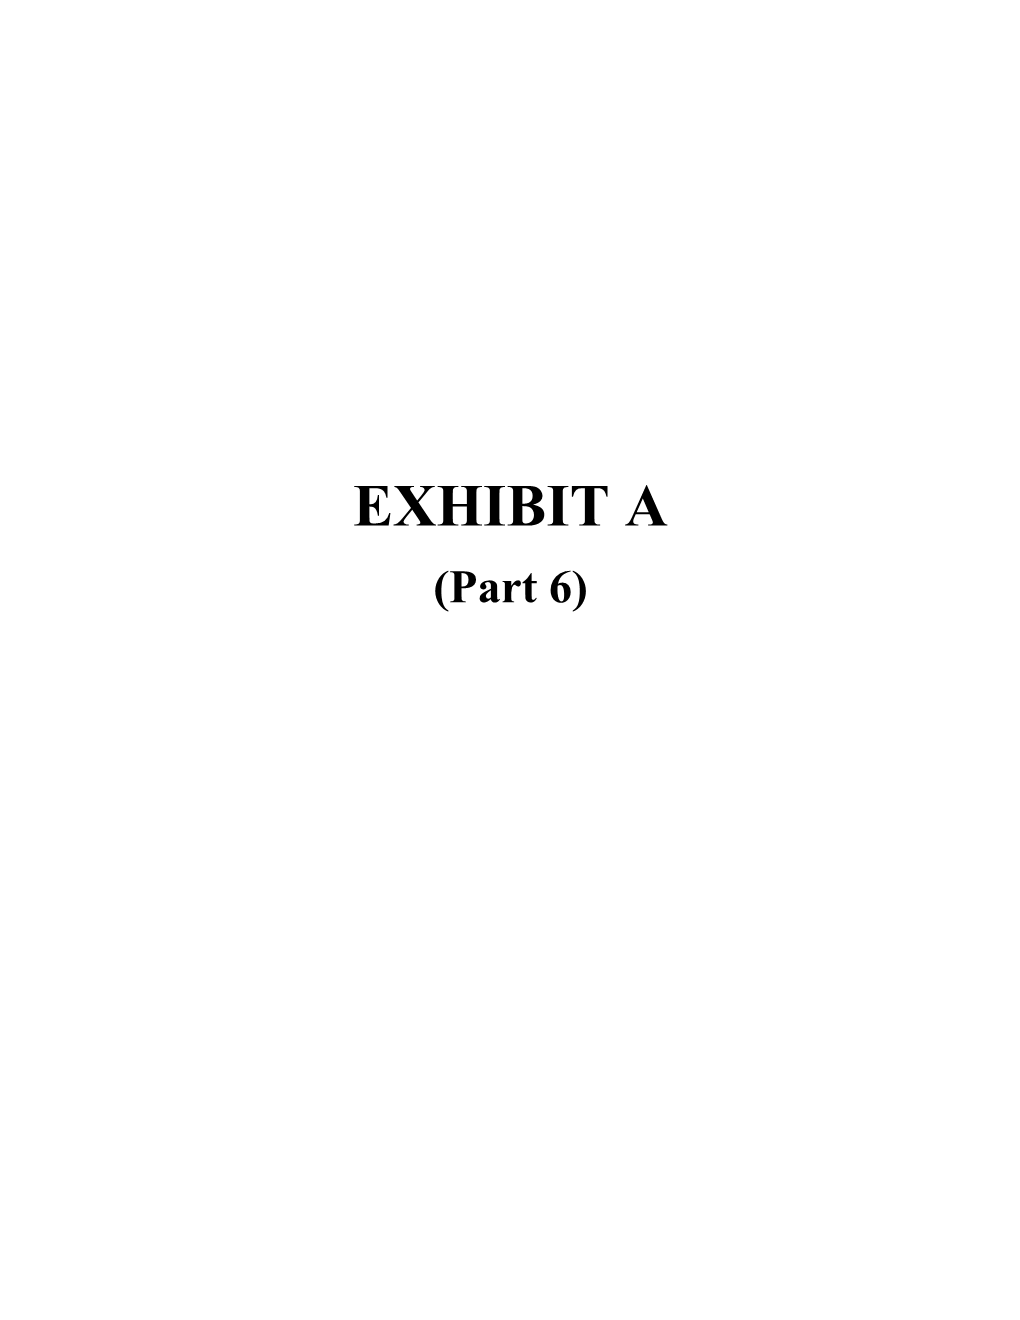 EXHIBIT a (Part 6) EXHIBIT A-51 • West Memphis Three DNI --Ilts Page 1 Of2